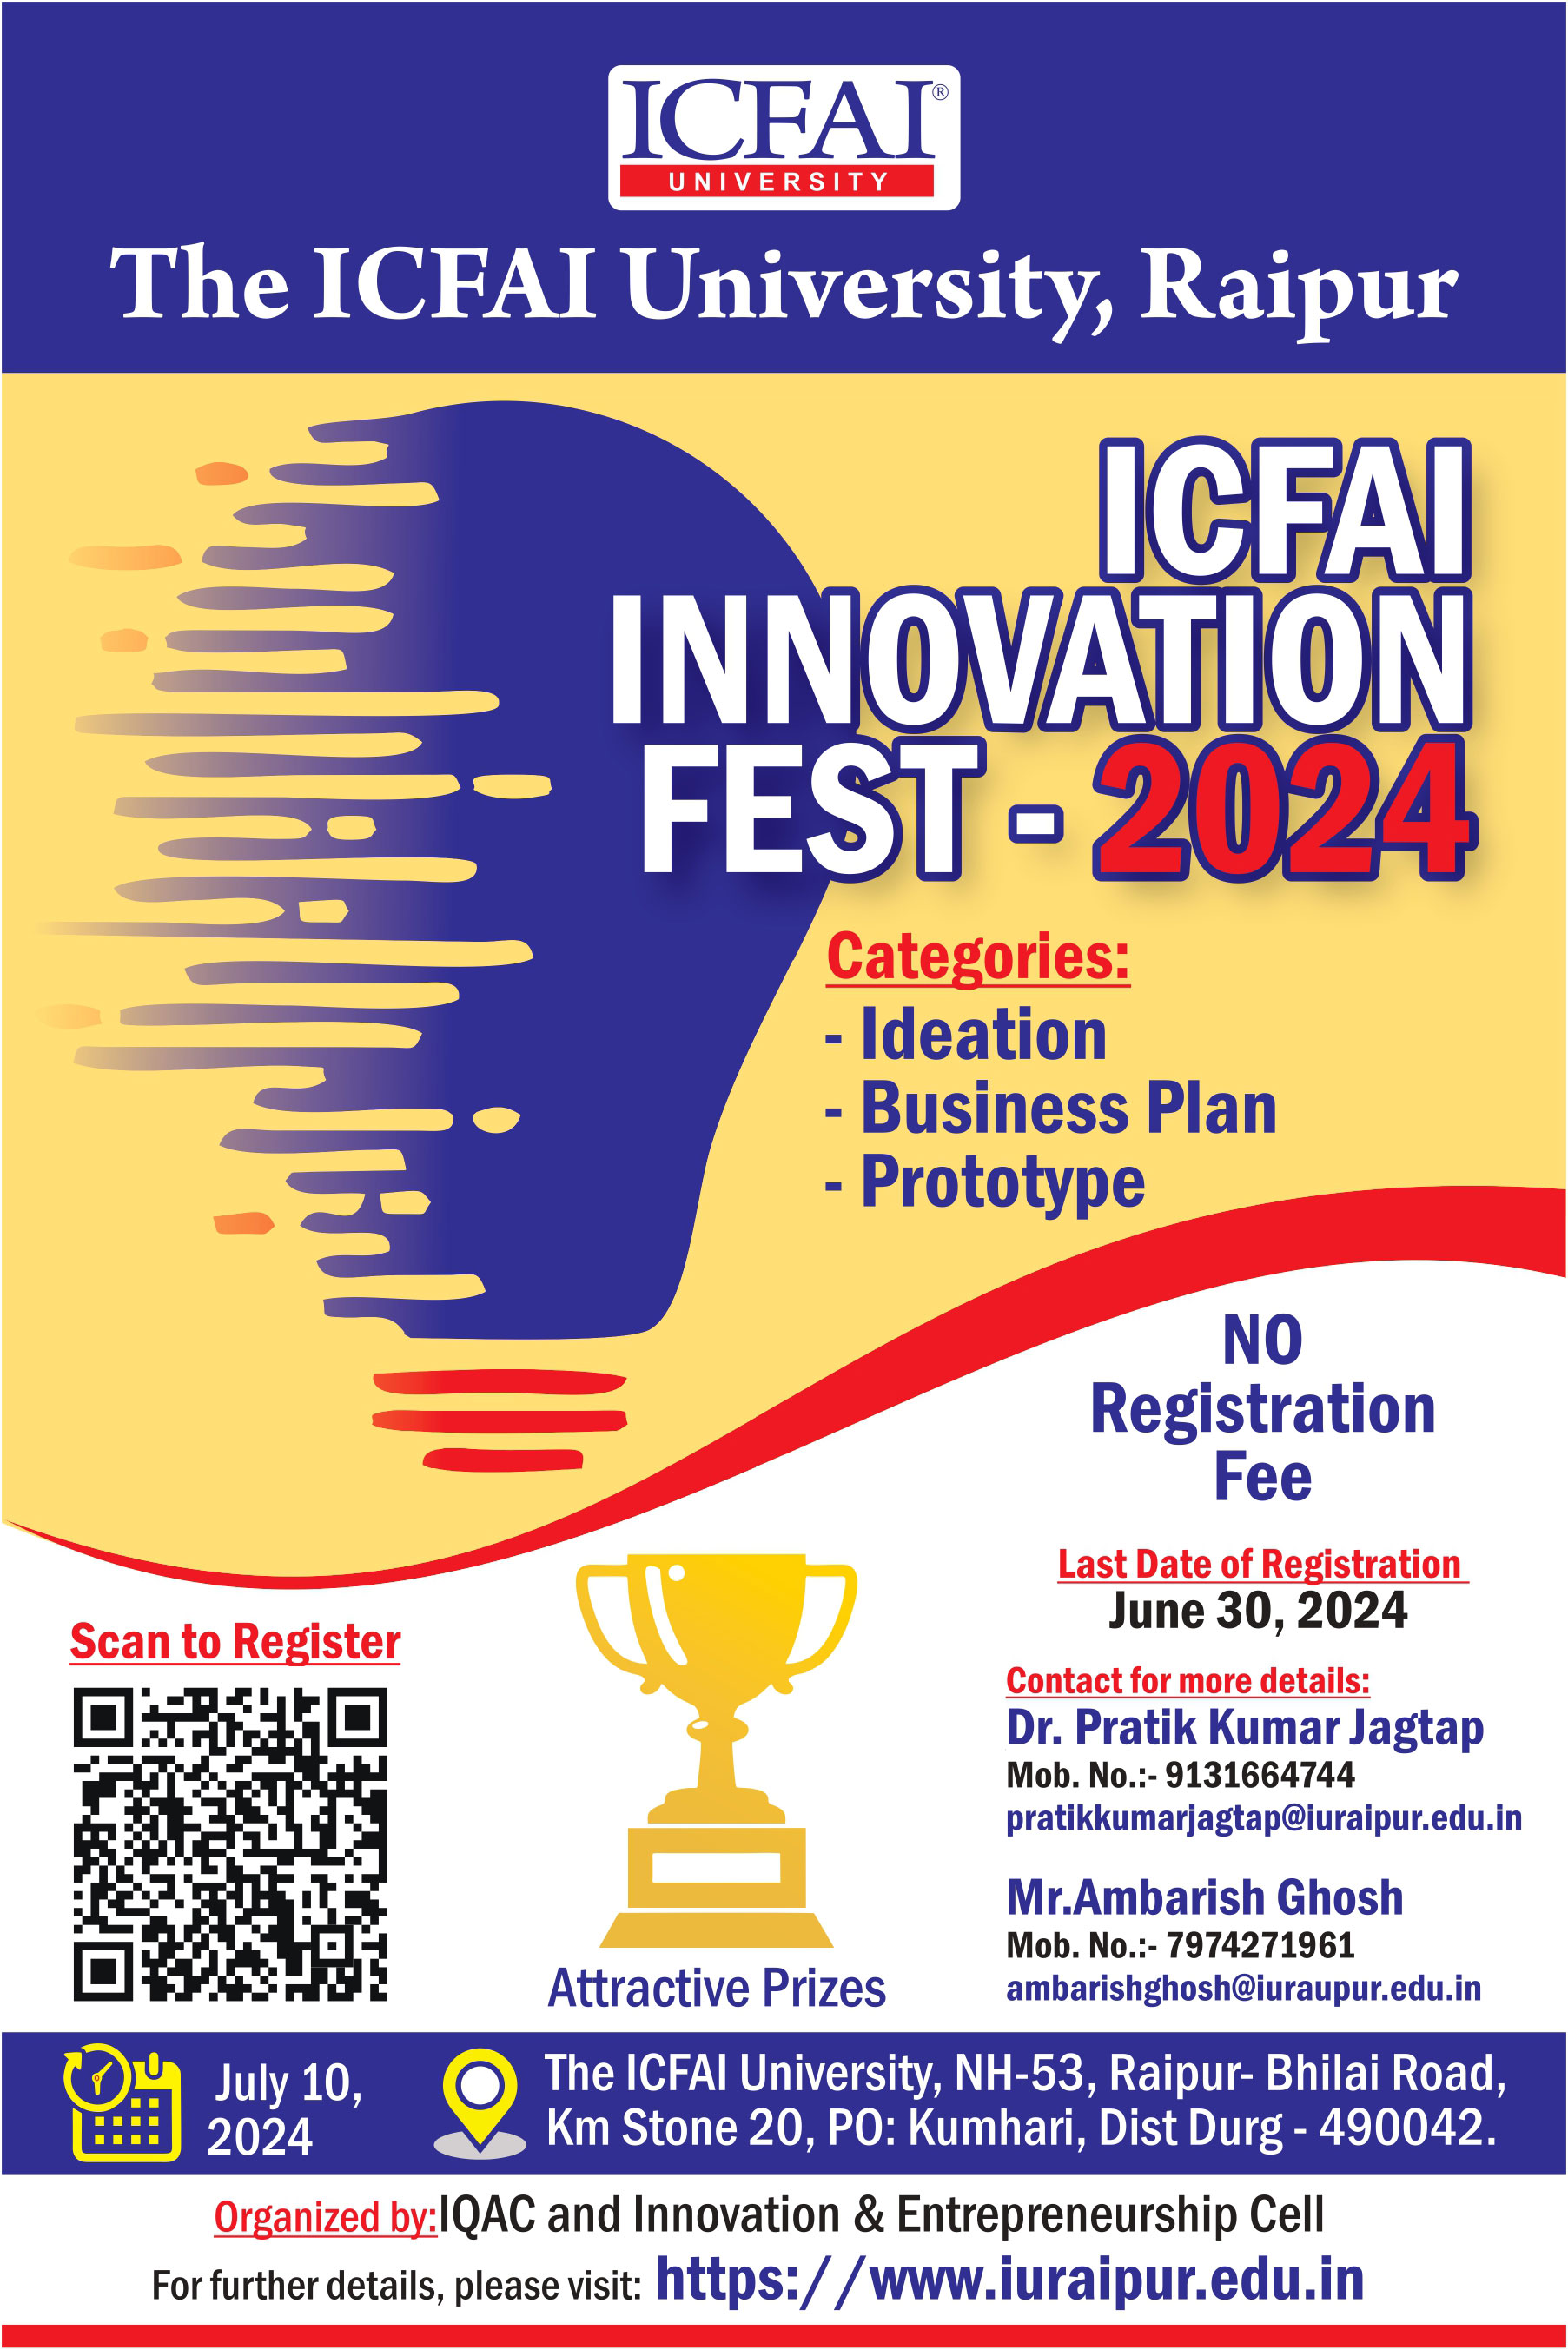 ICFAI - Innovation Fest 2024